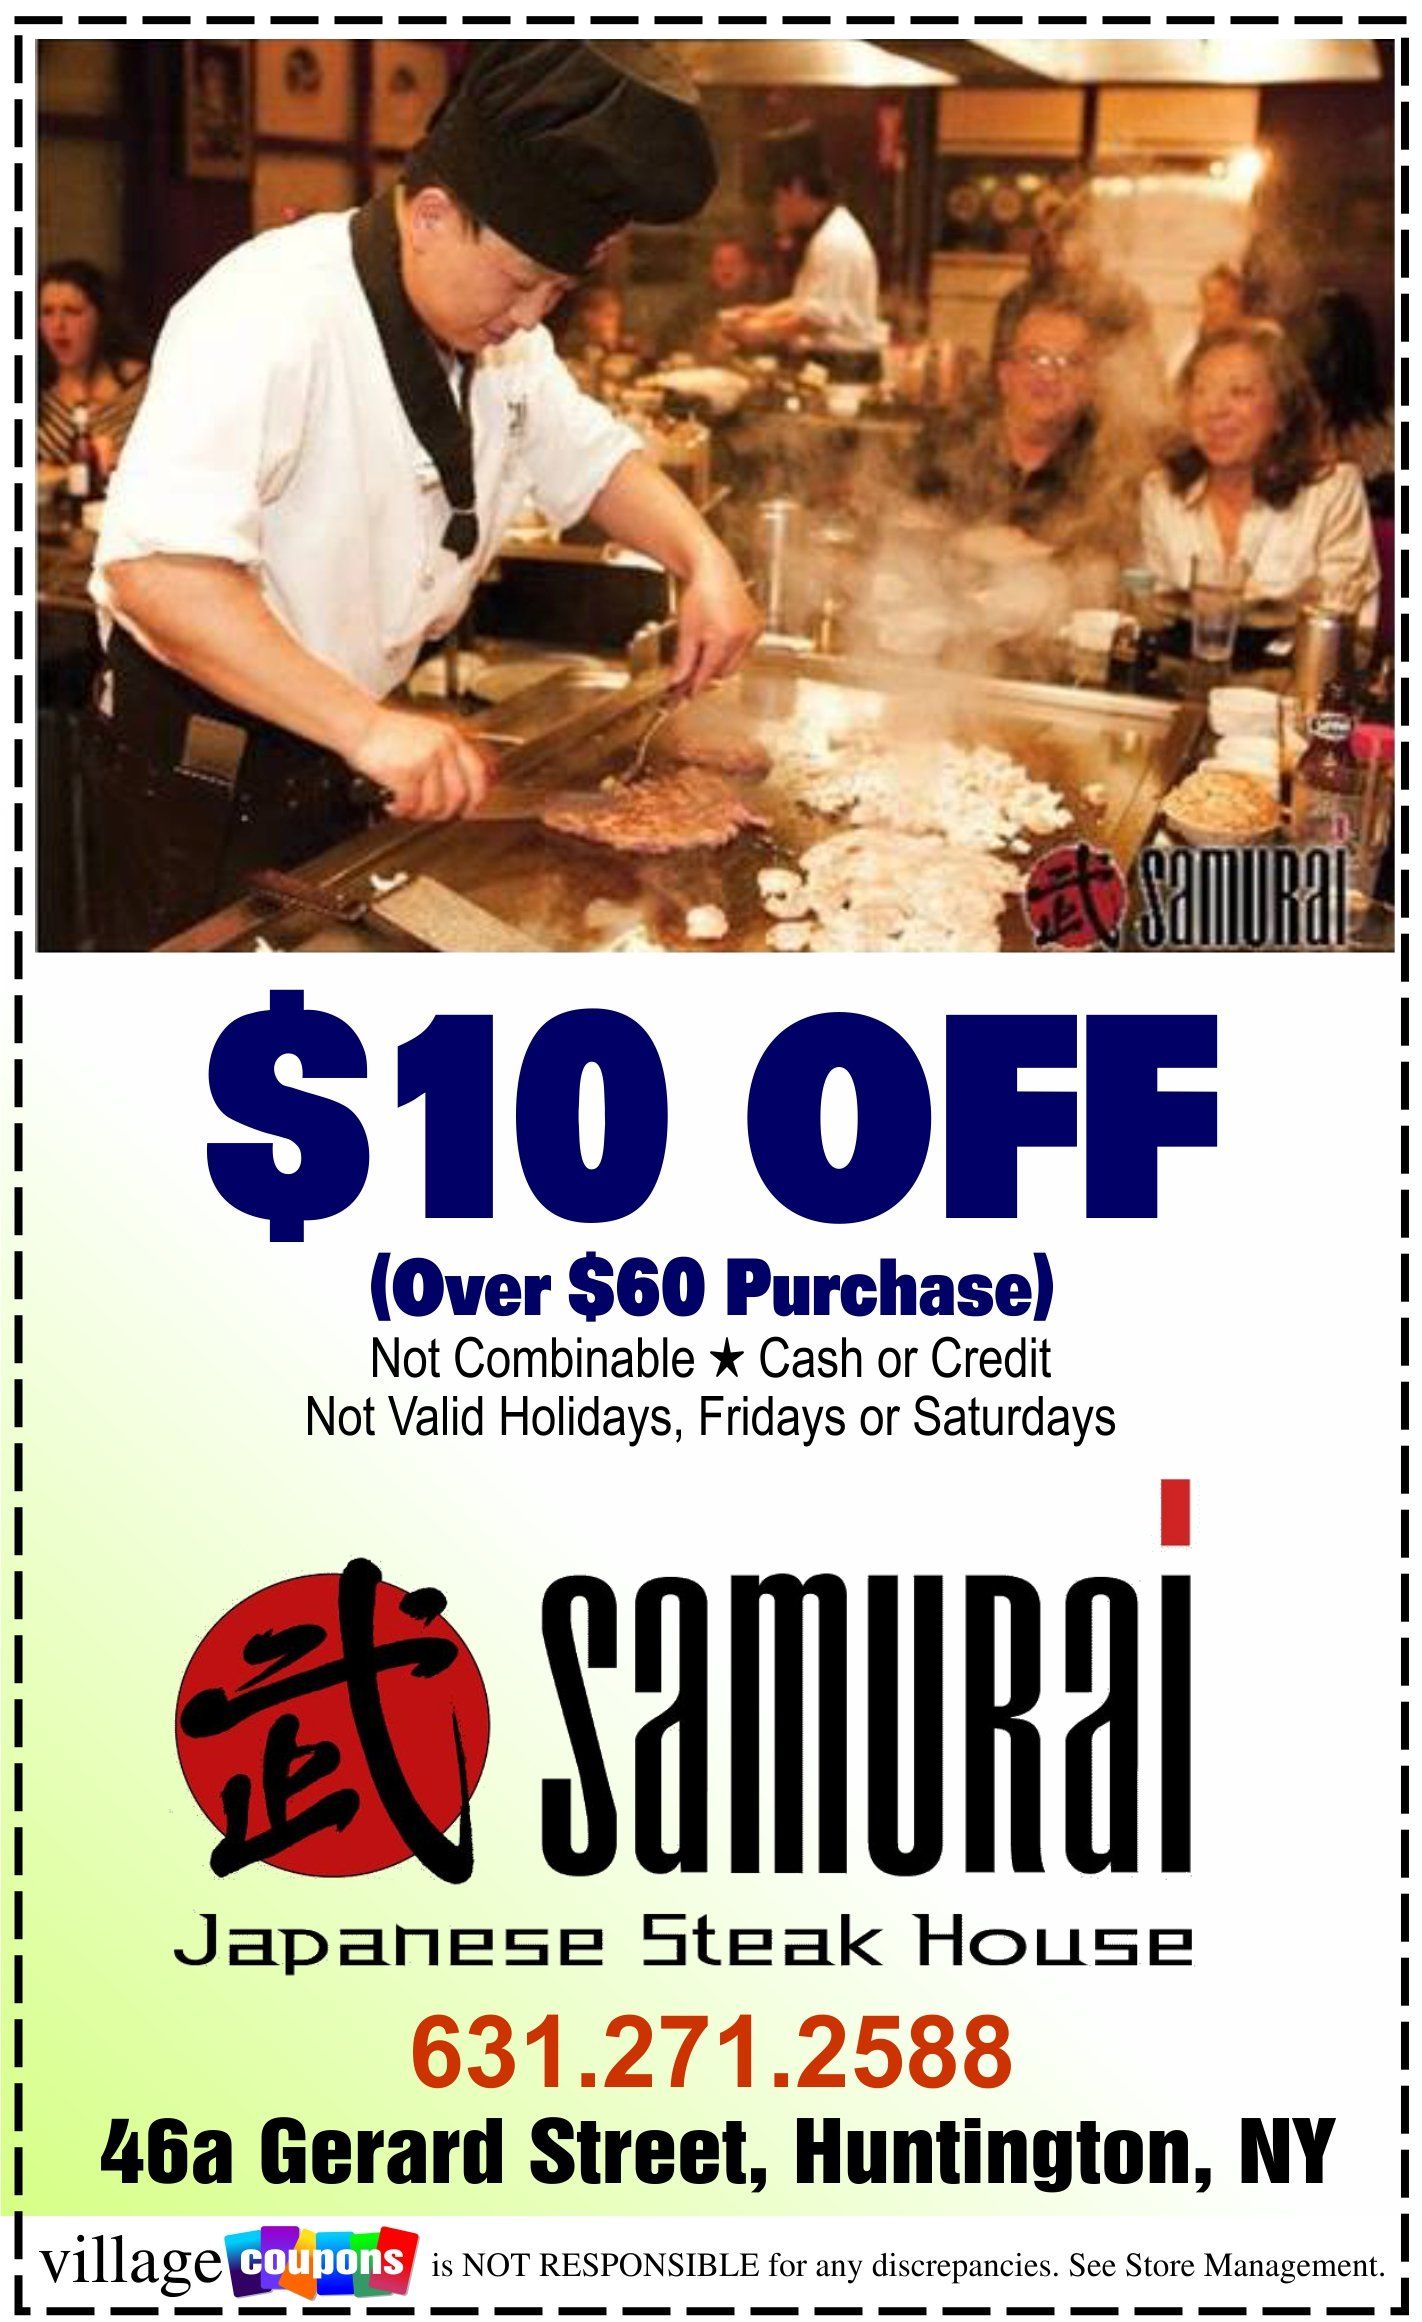 A coupon for samurai japanese steak house in huntington new york